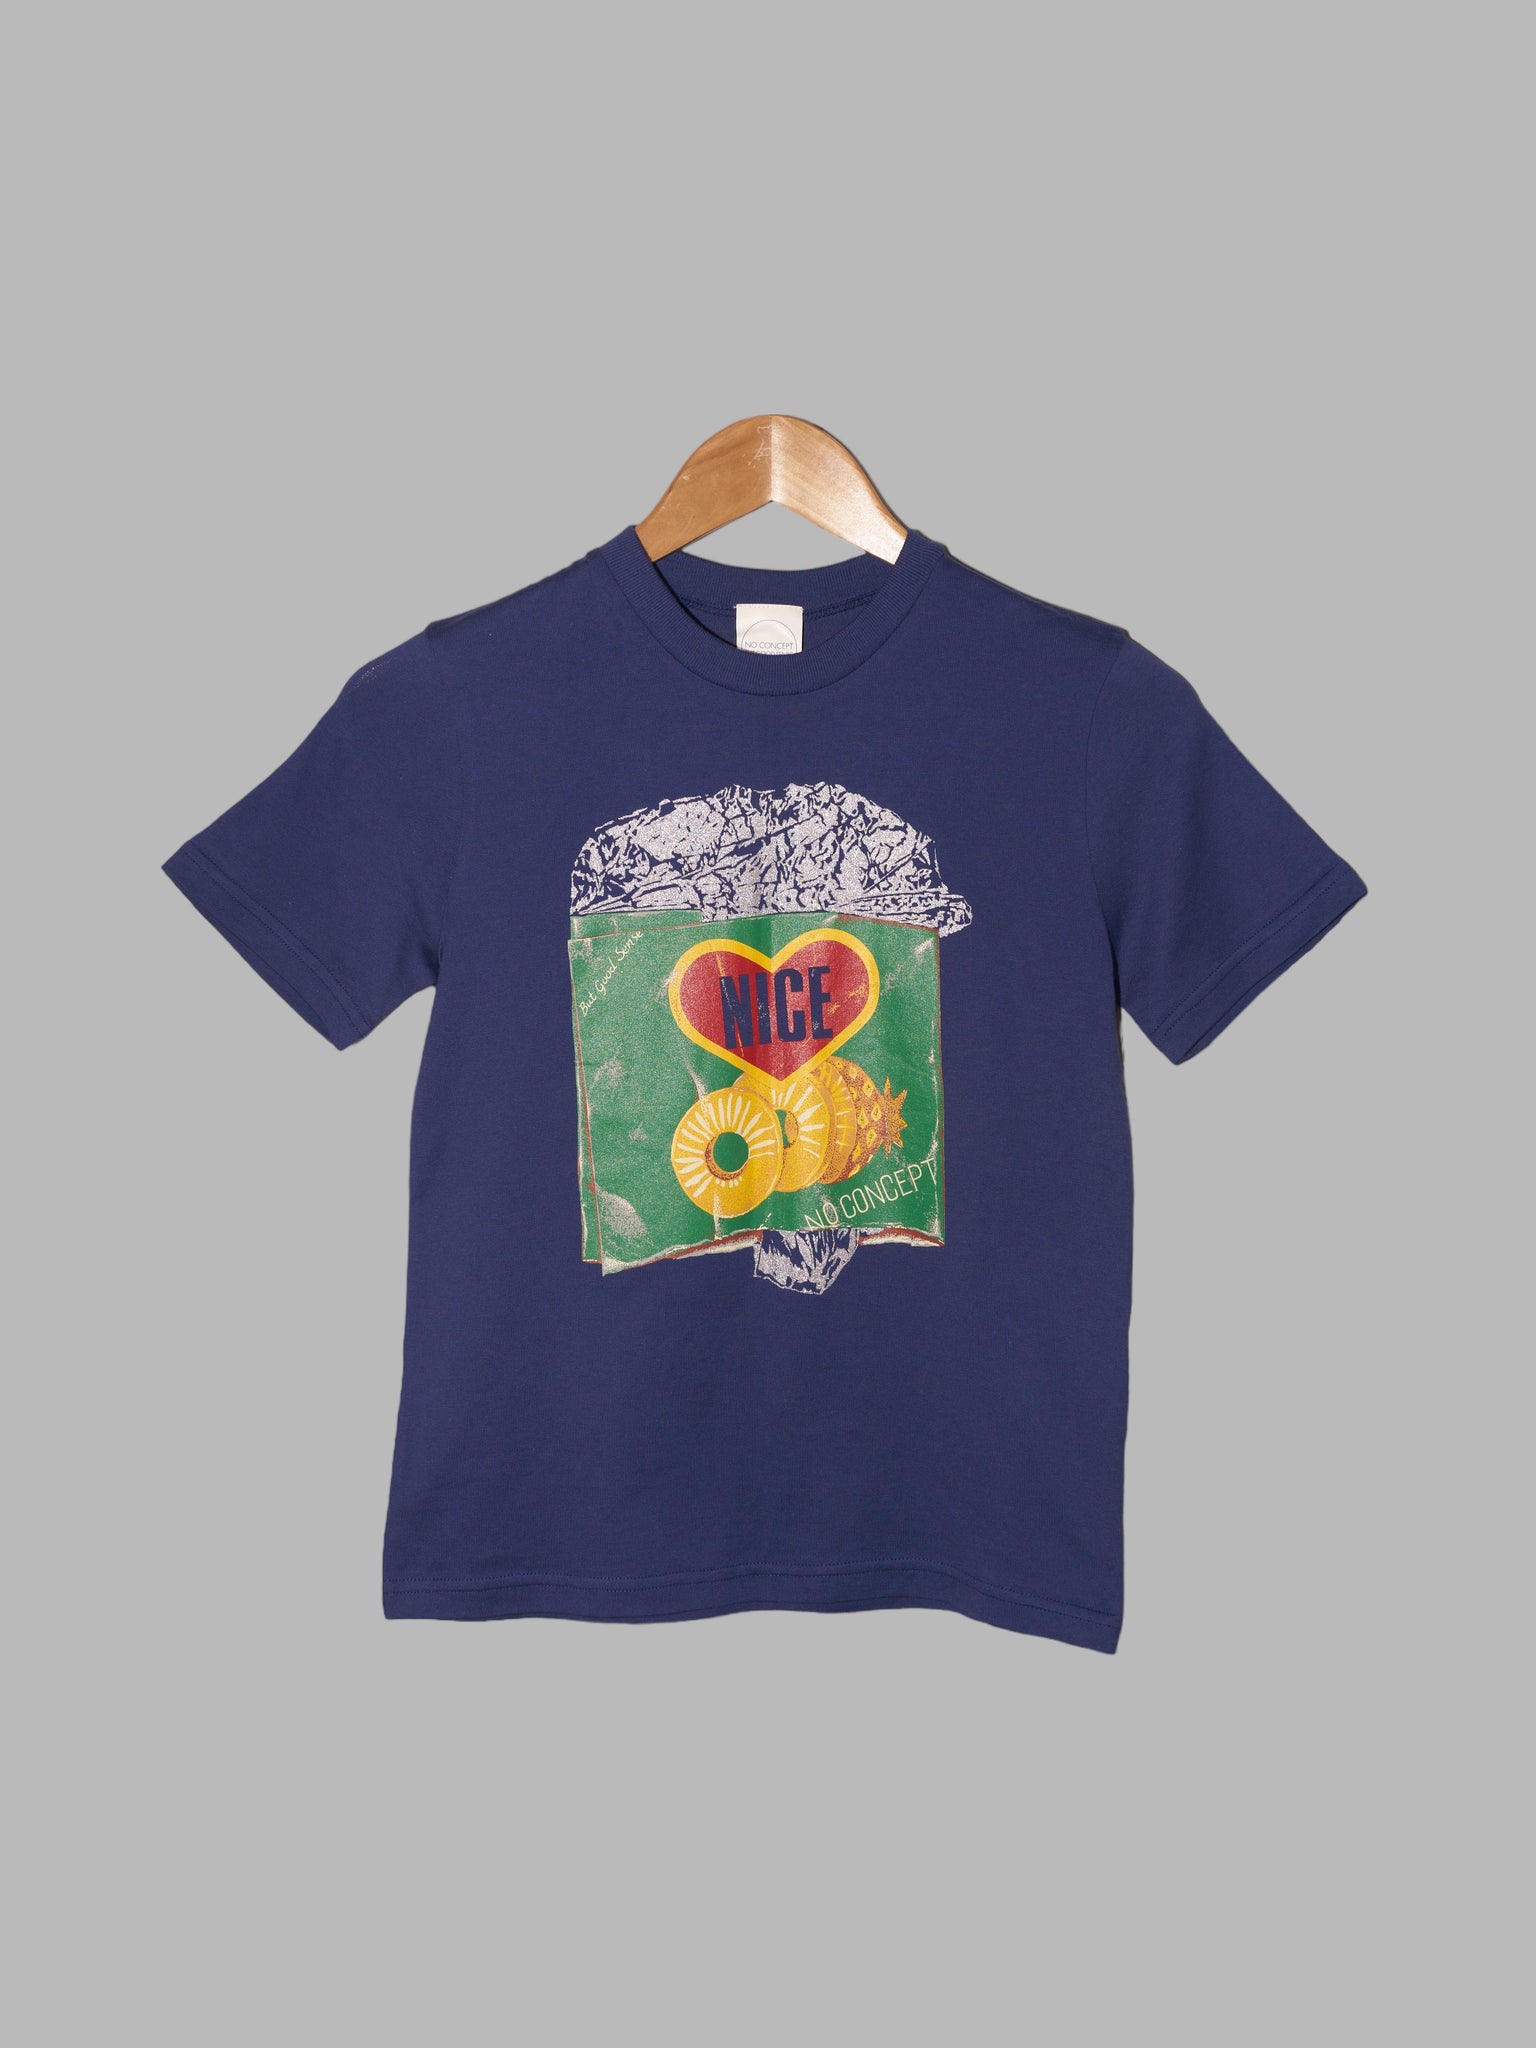 No Concept But Good Sense by Yoichi Nagasawa blue pineapple can logo t-shirt